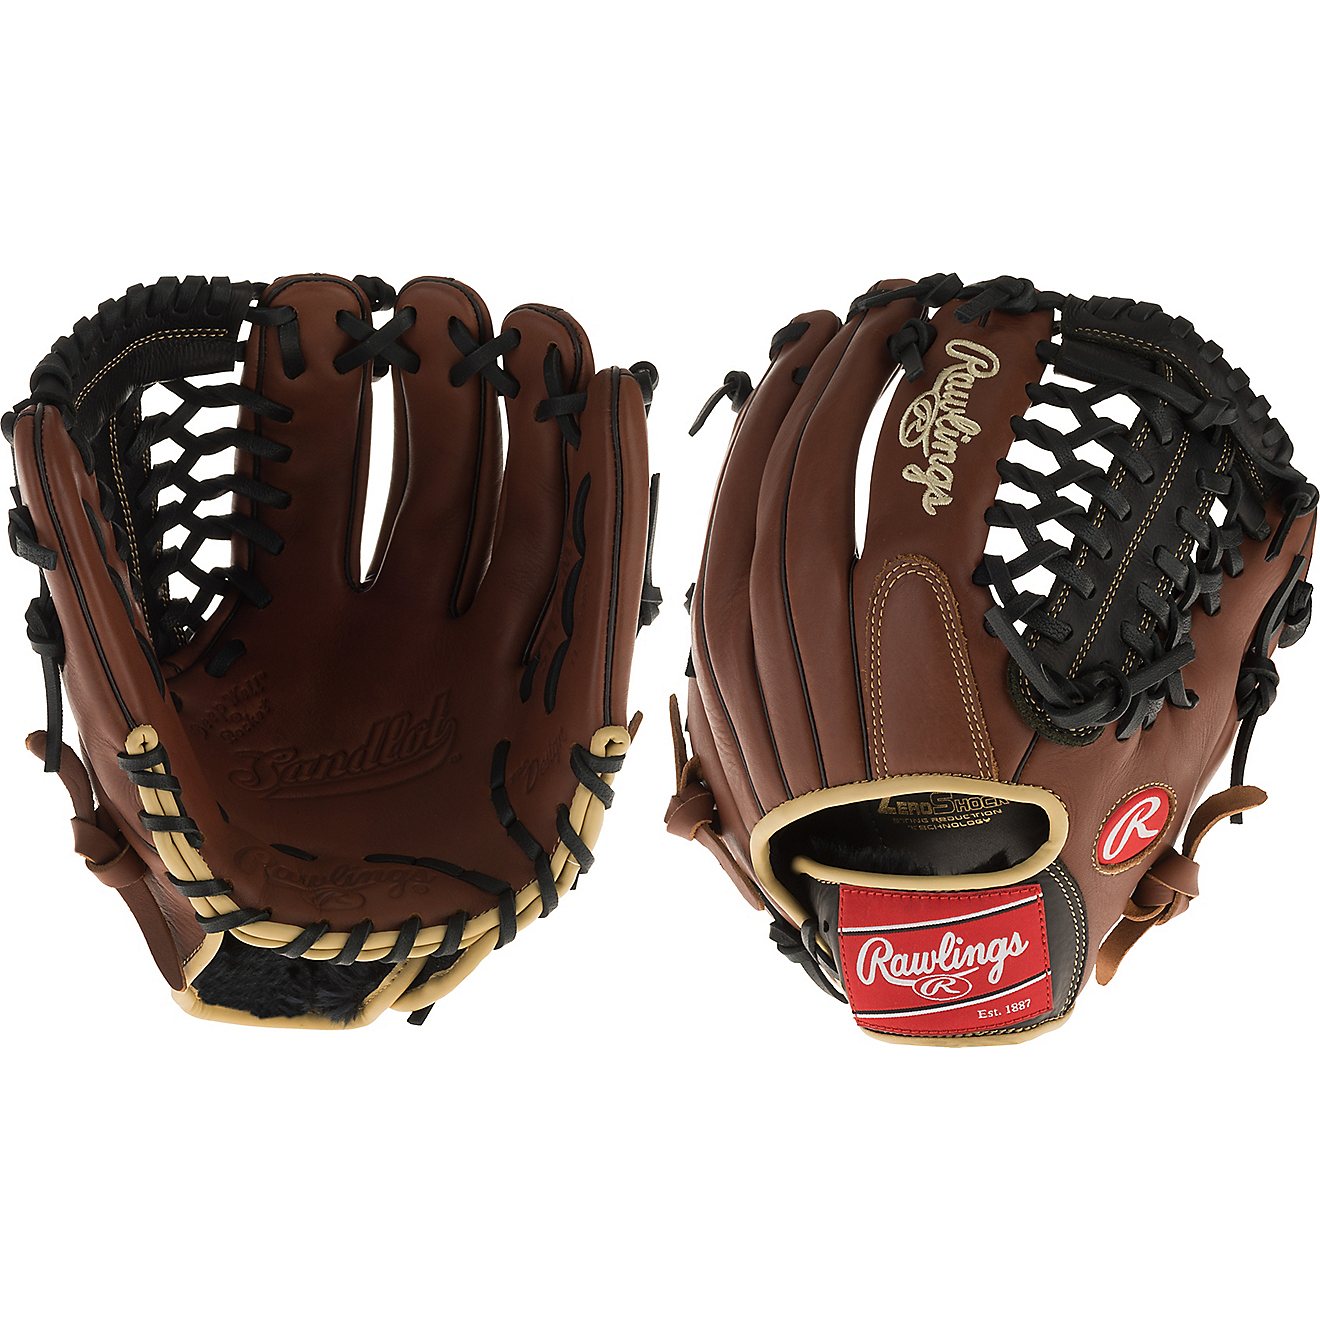 Rawlings Sandlot Baseball Glove Series 